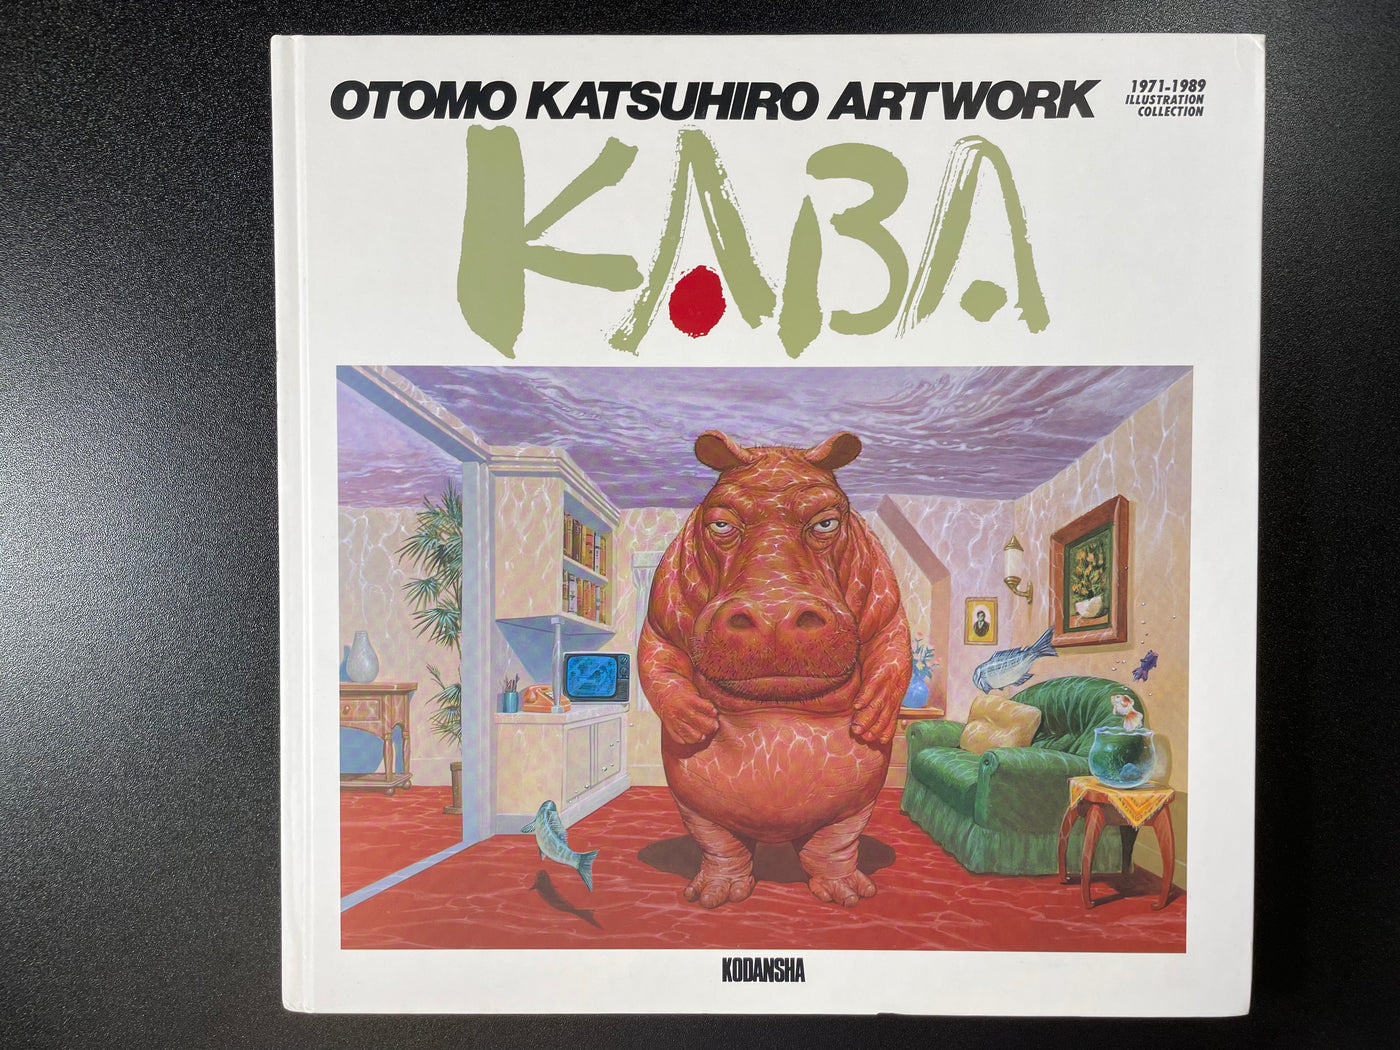 Kaba Otomo Katsuhiro Artwork 1971-1989 Illustration Collection w/ Plastic Cover